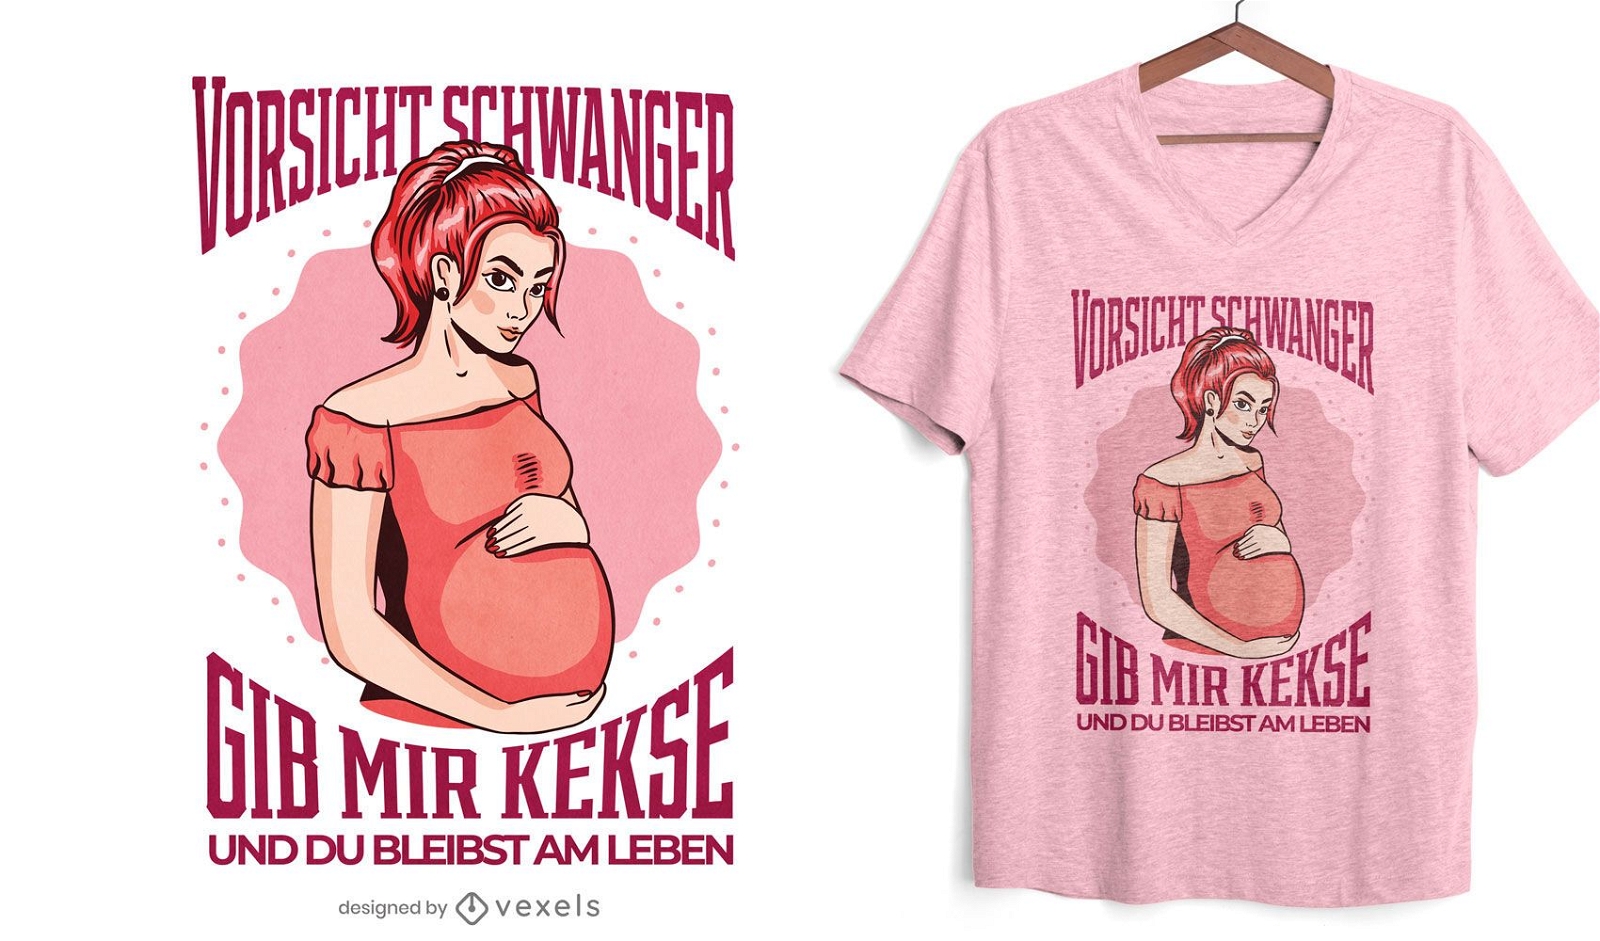 Vorsicht schwanger T-Shirt Design